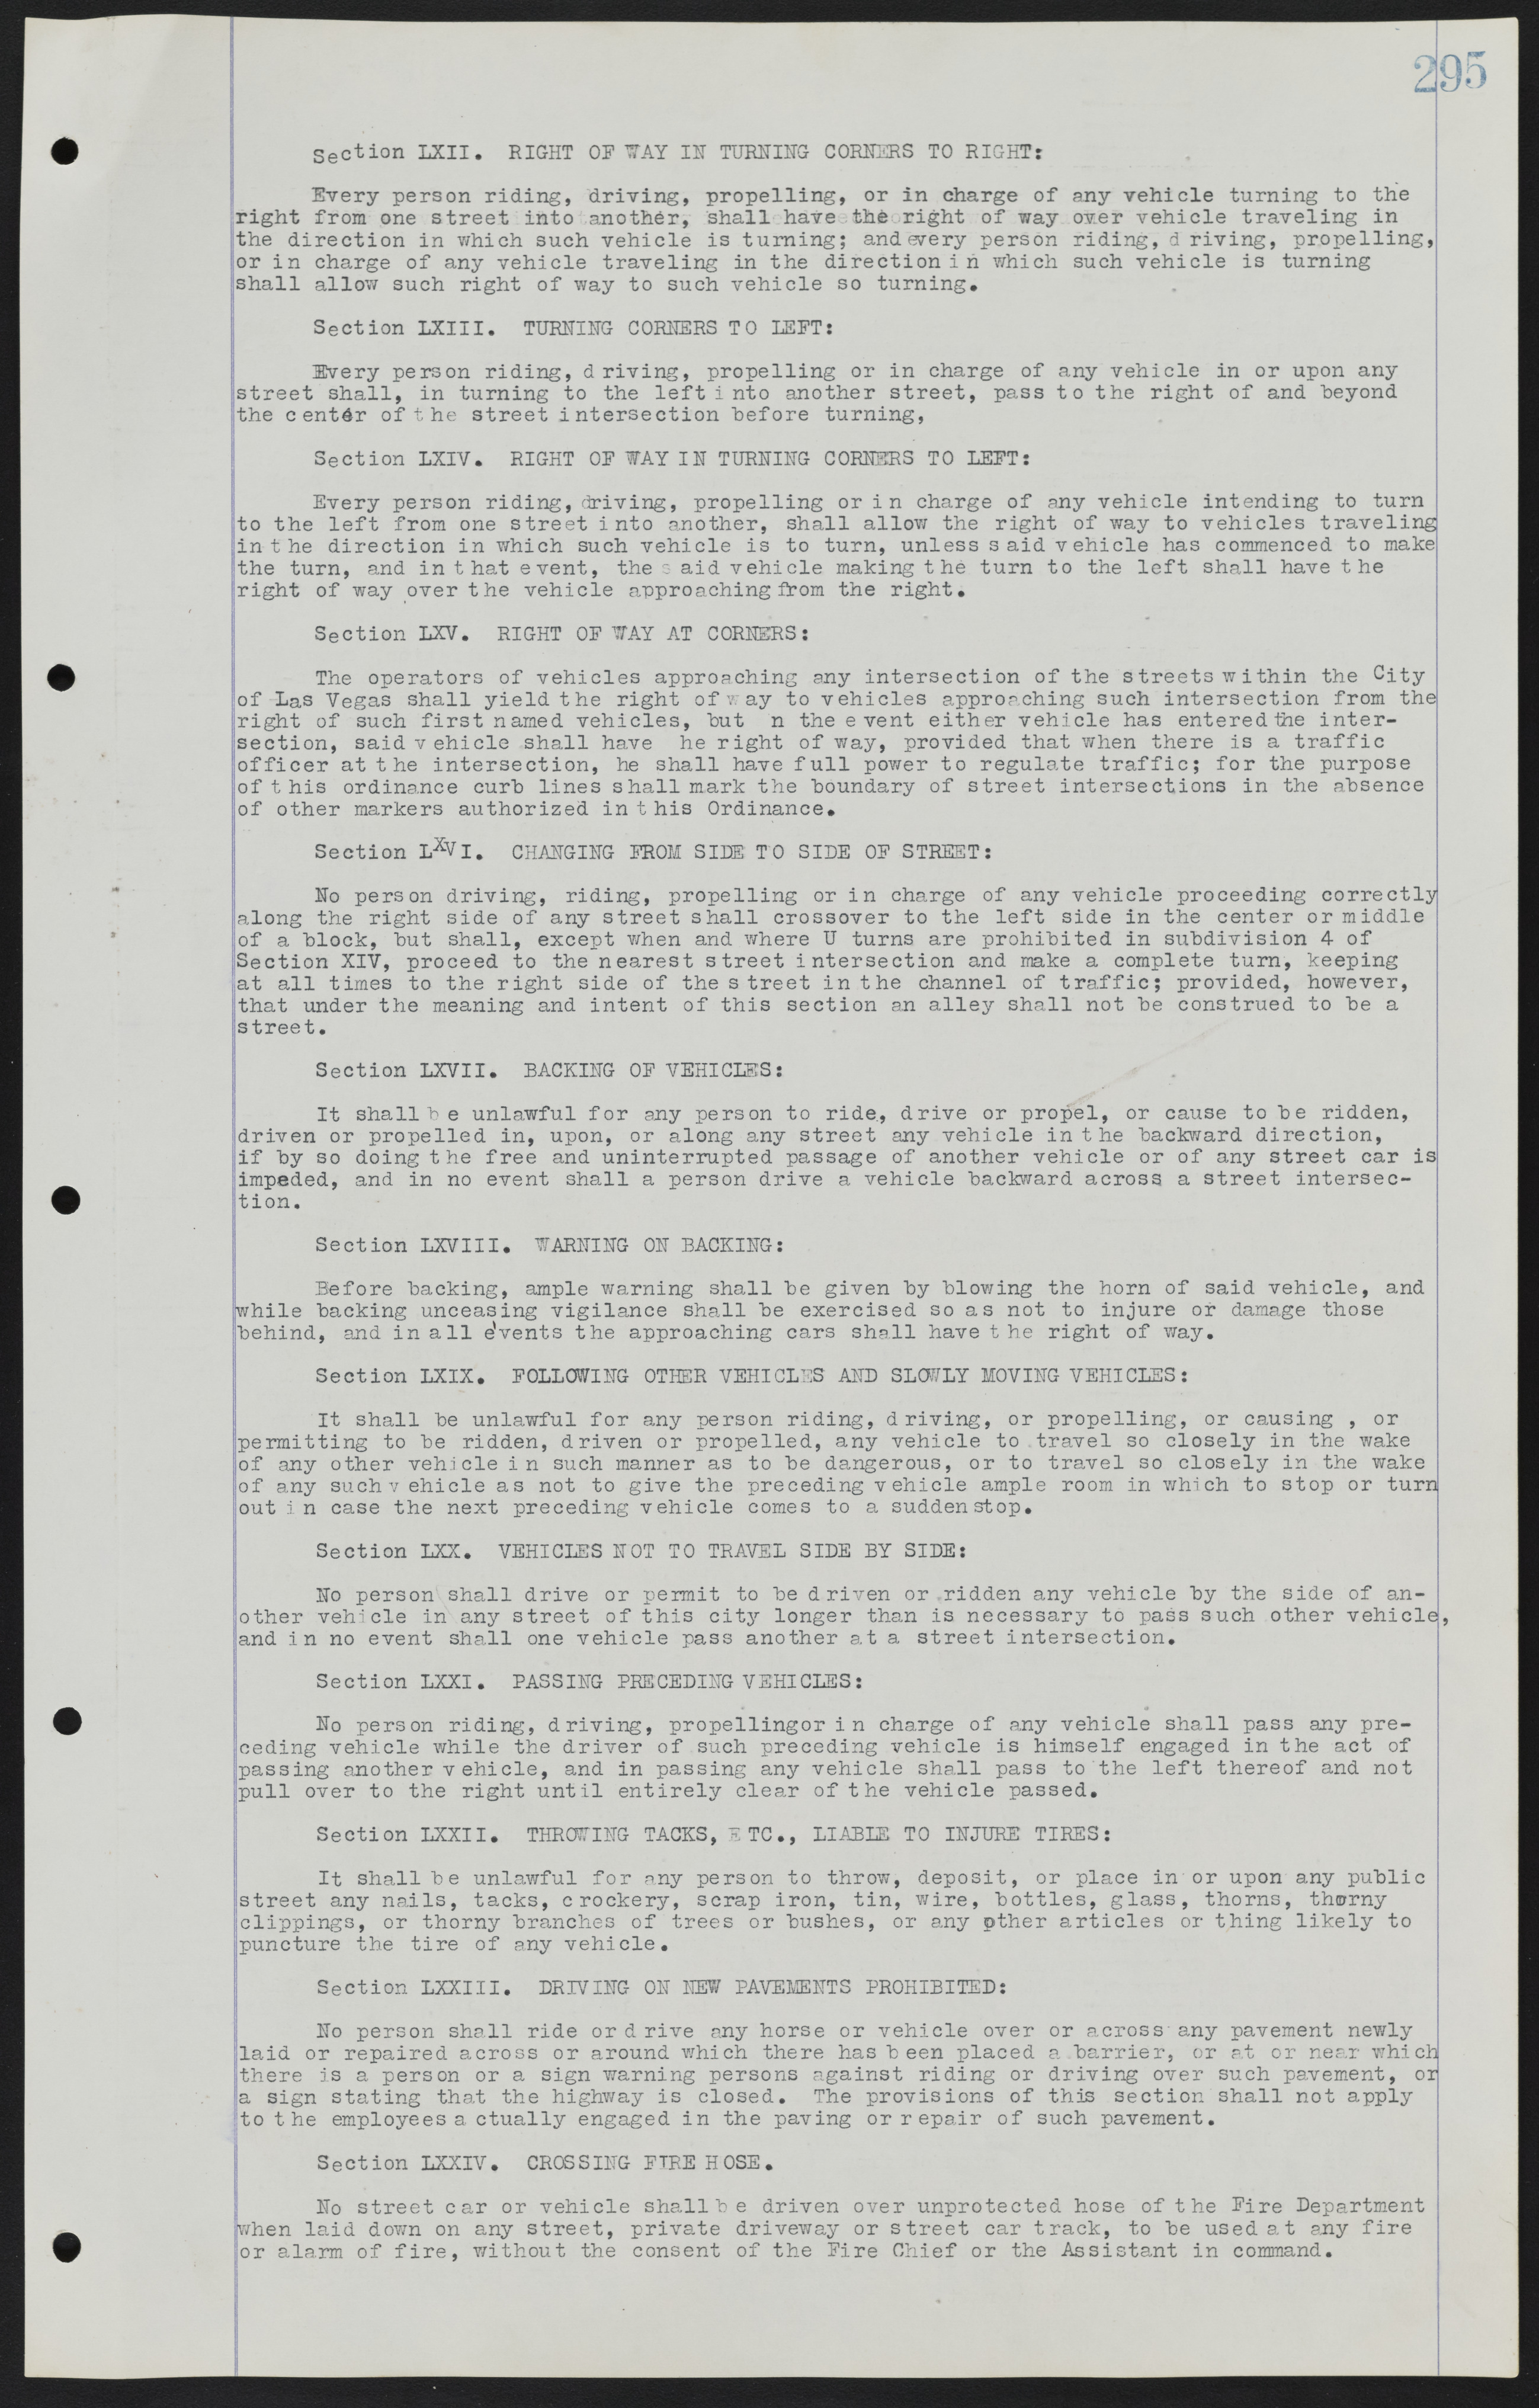 Las Vegas City Ordinances, July 18, 1911 to March 31, 1933, lvc000013-299